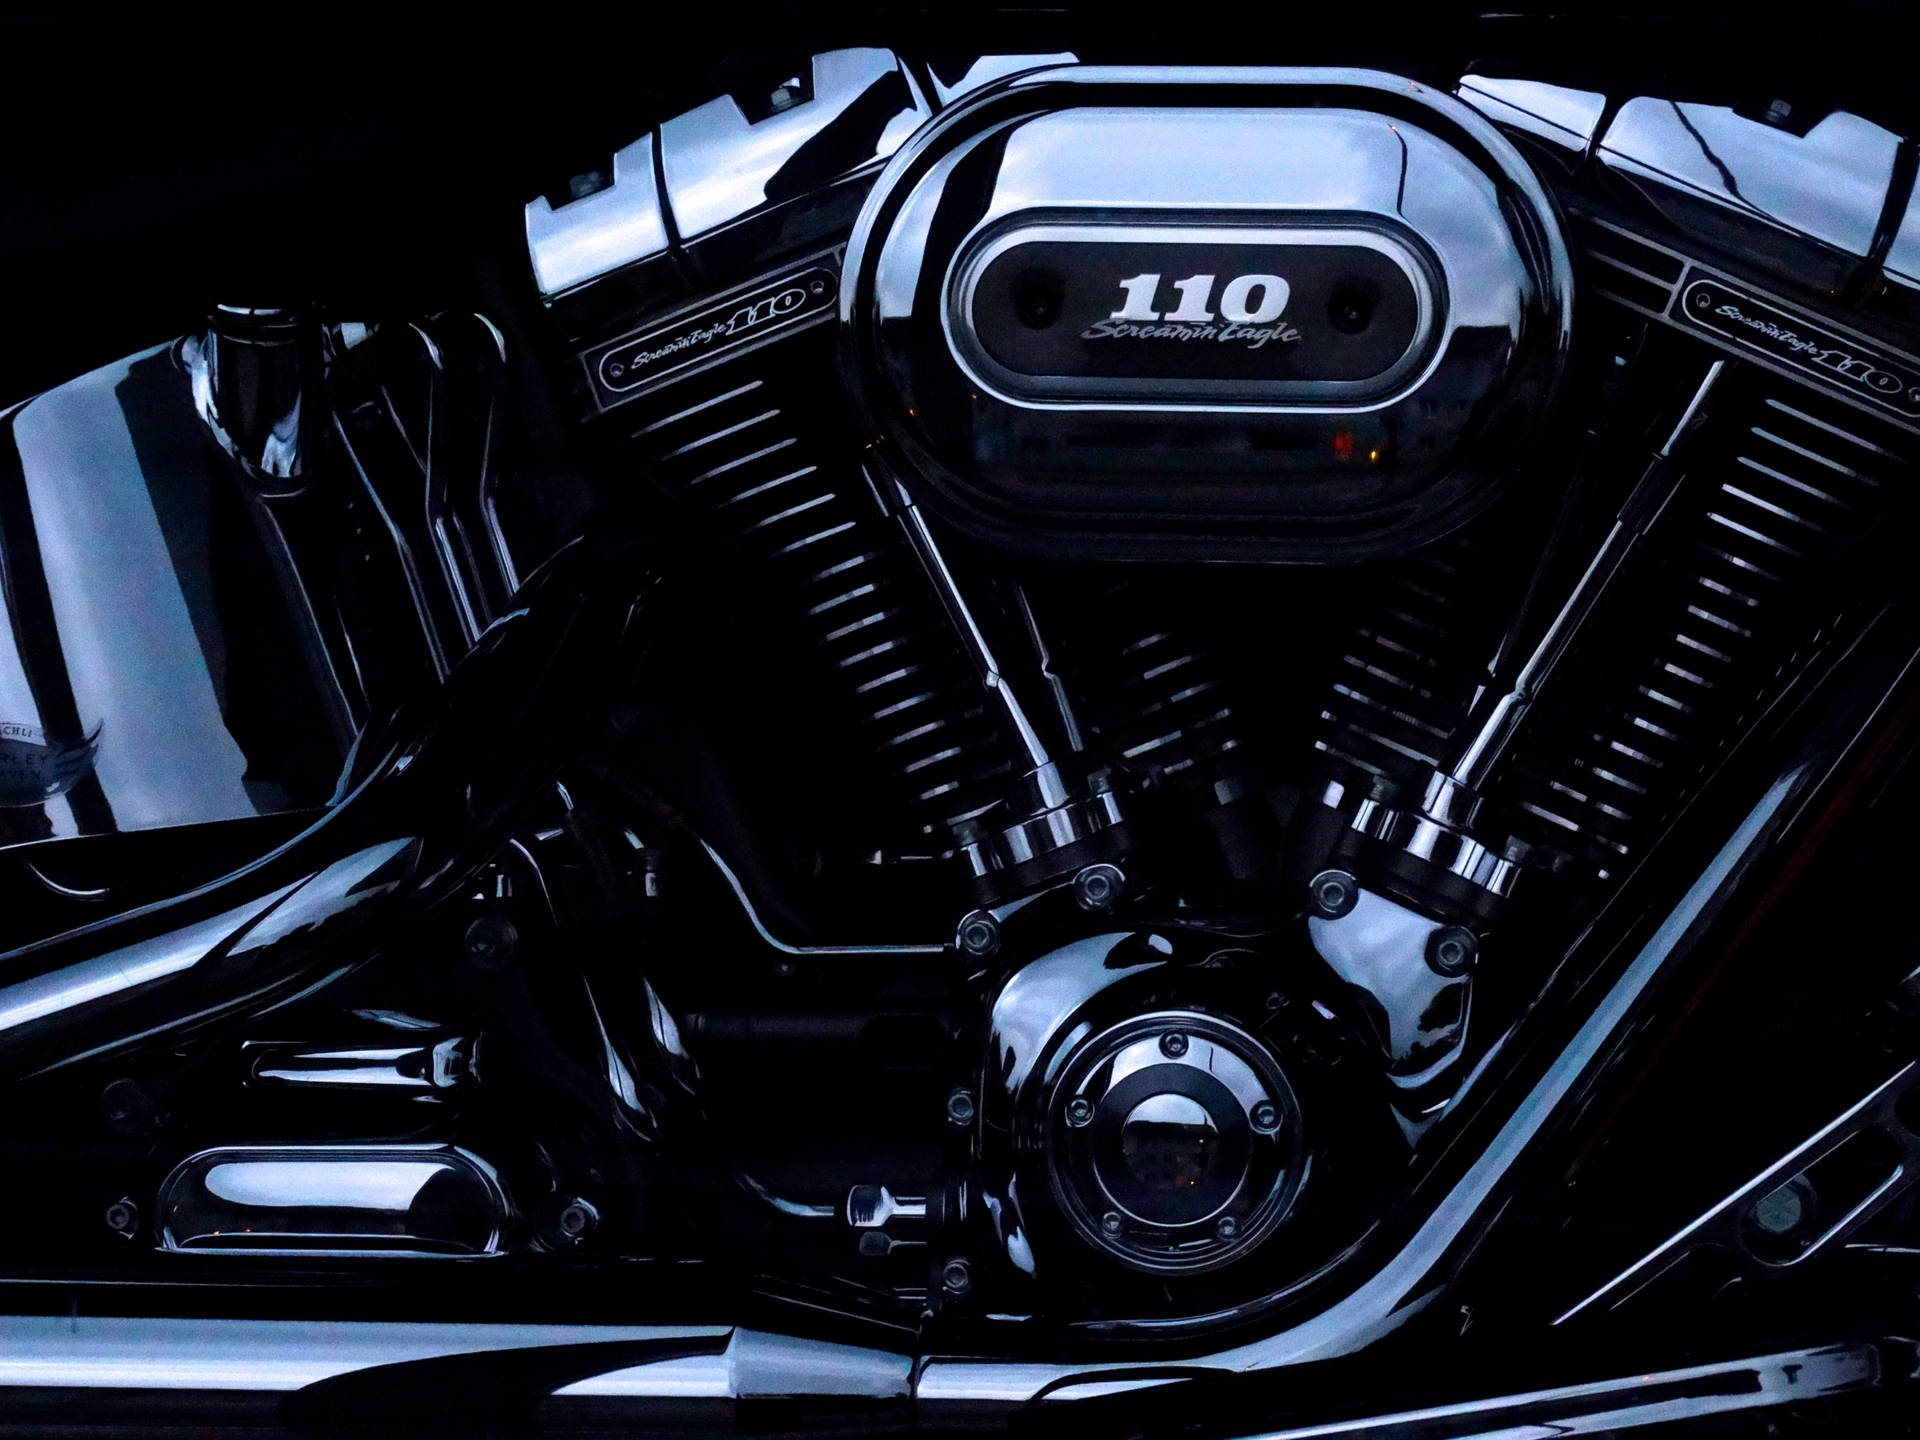 Harley Davidson 5184X3888 Wallpaper and Background Image